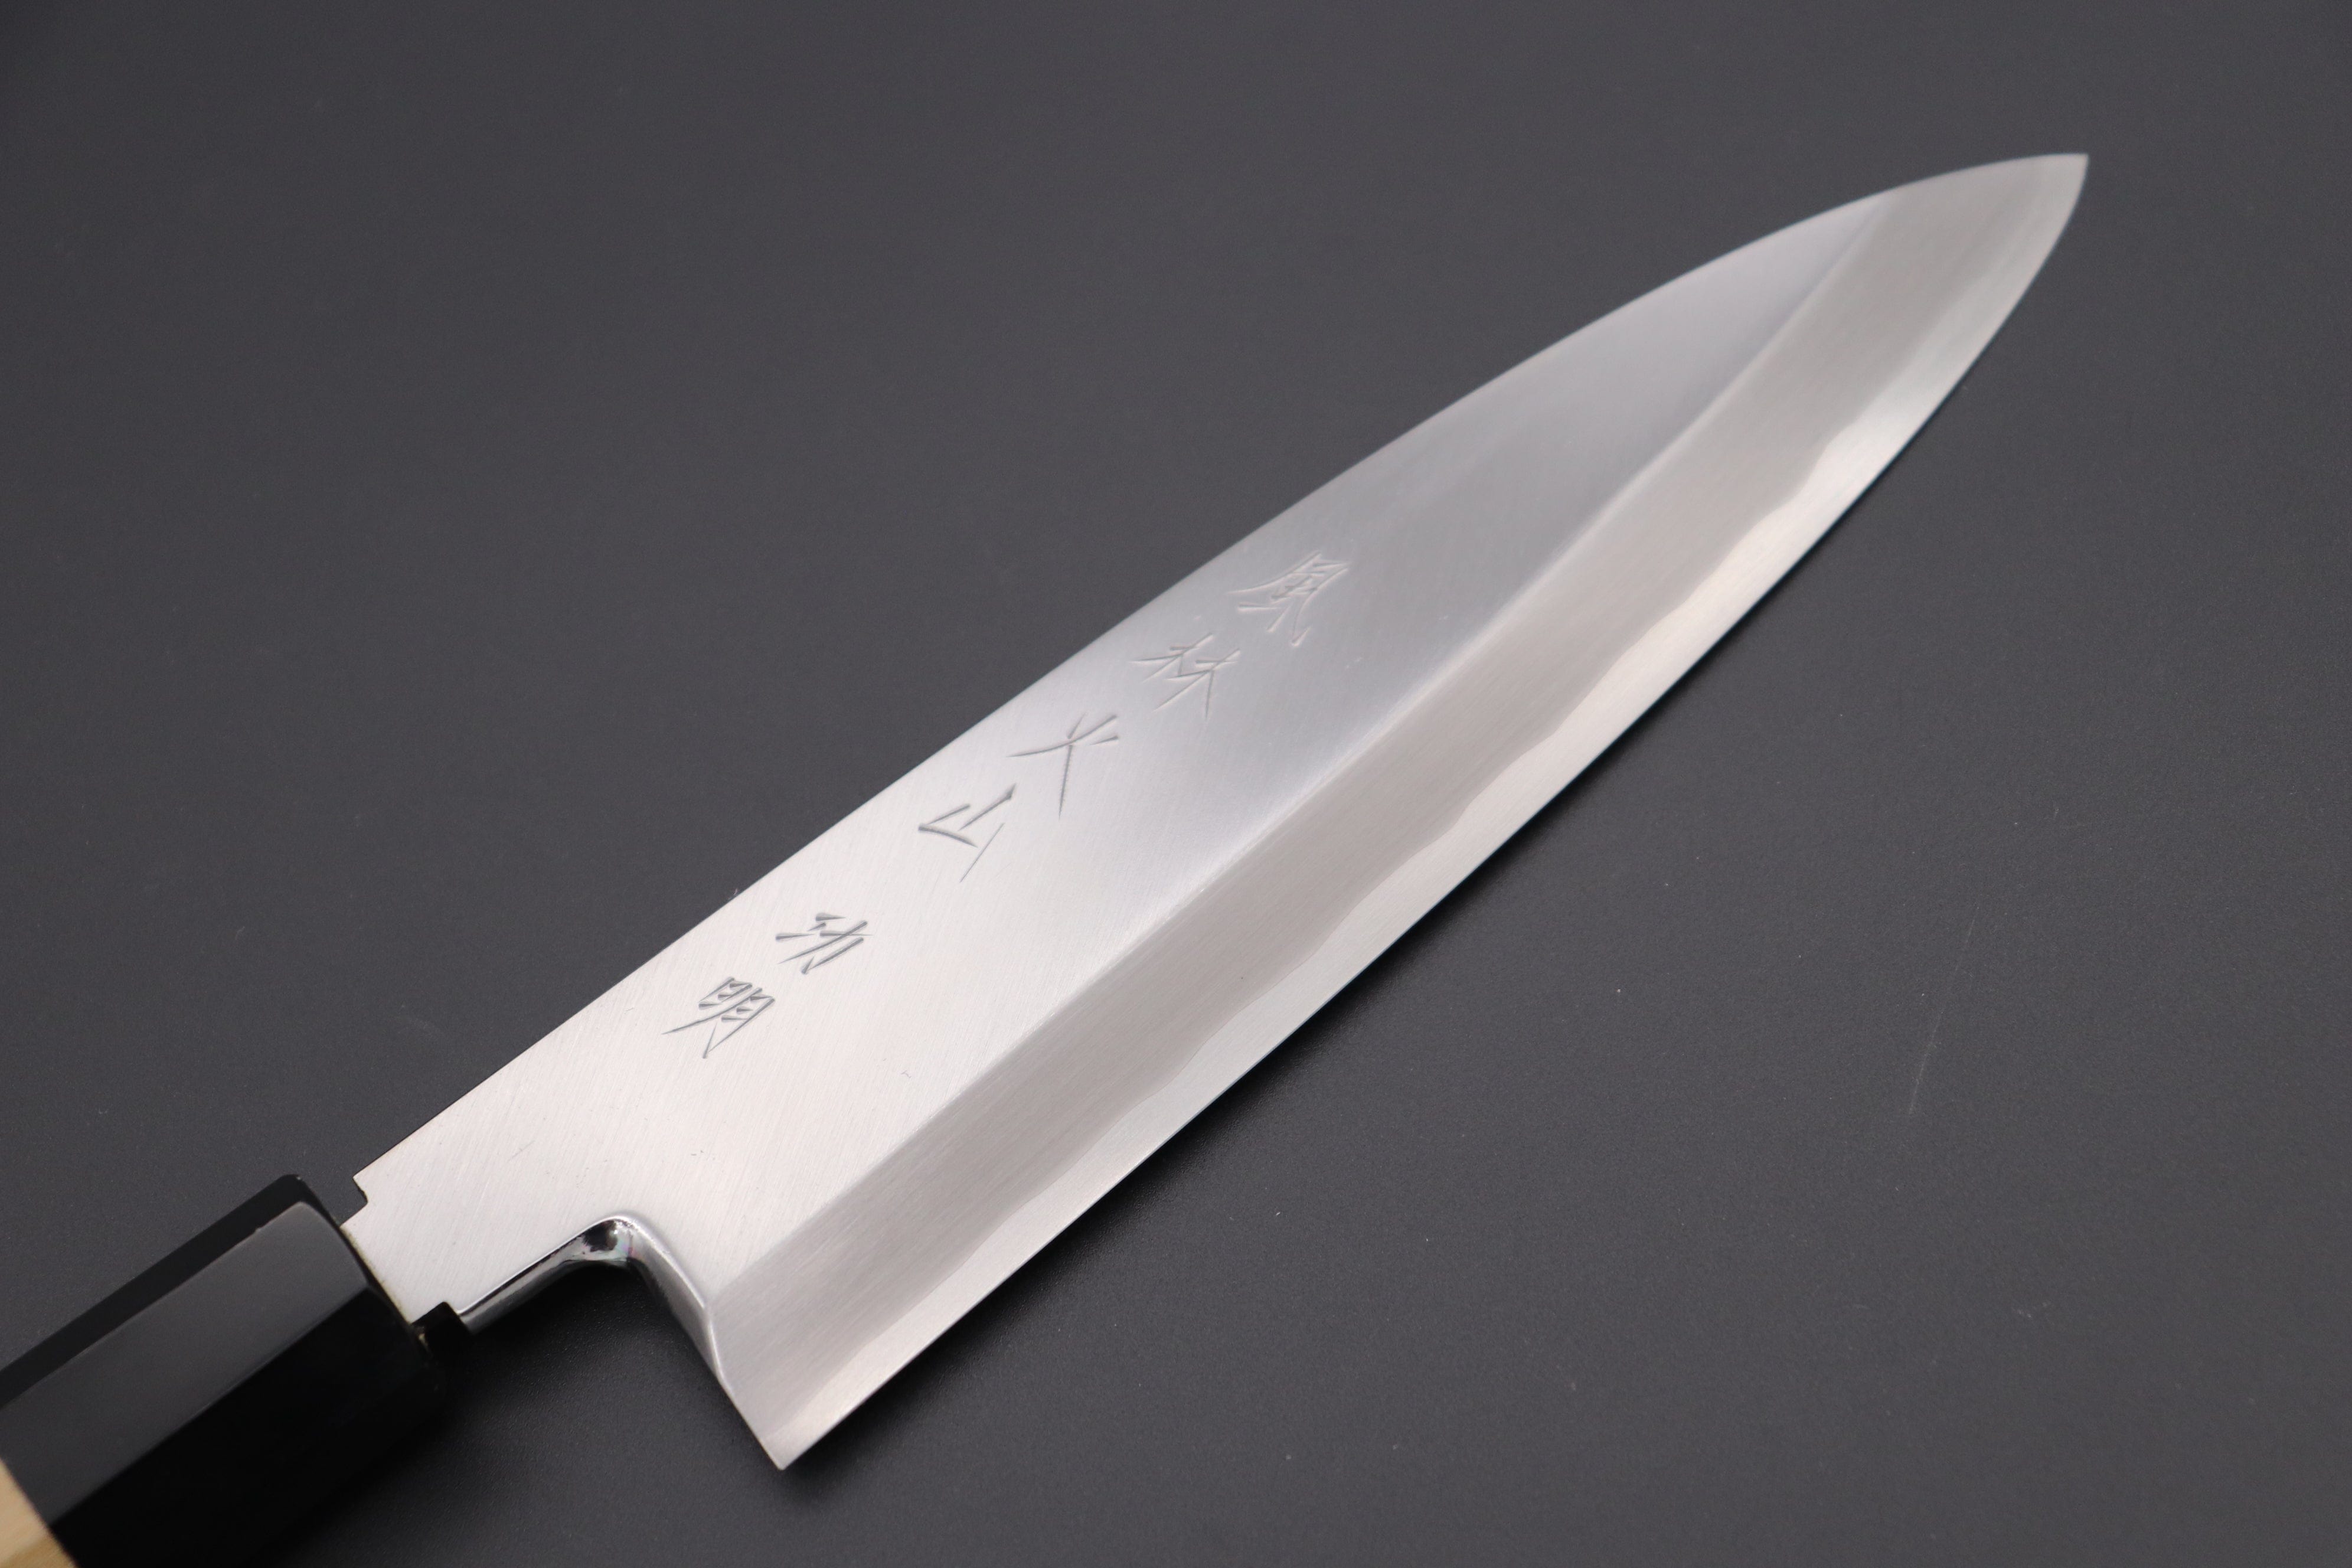 Fillet Knife 7 Blade Stainless steel fishermans gift best fish